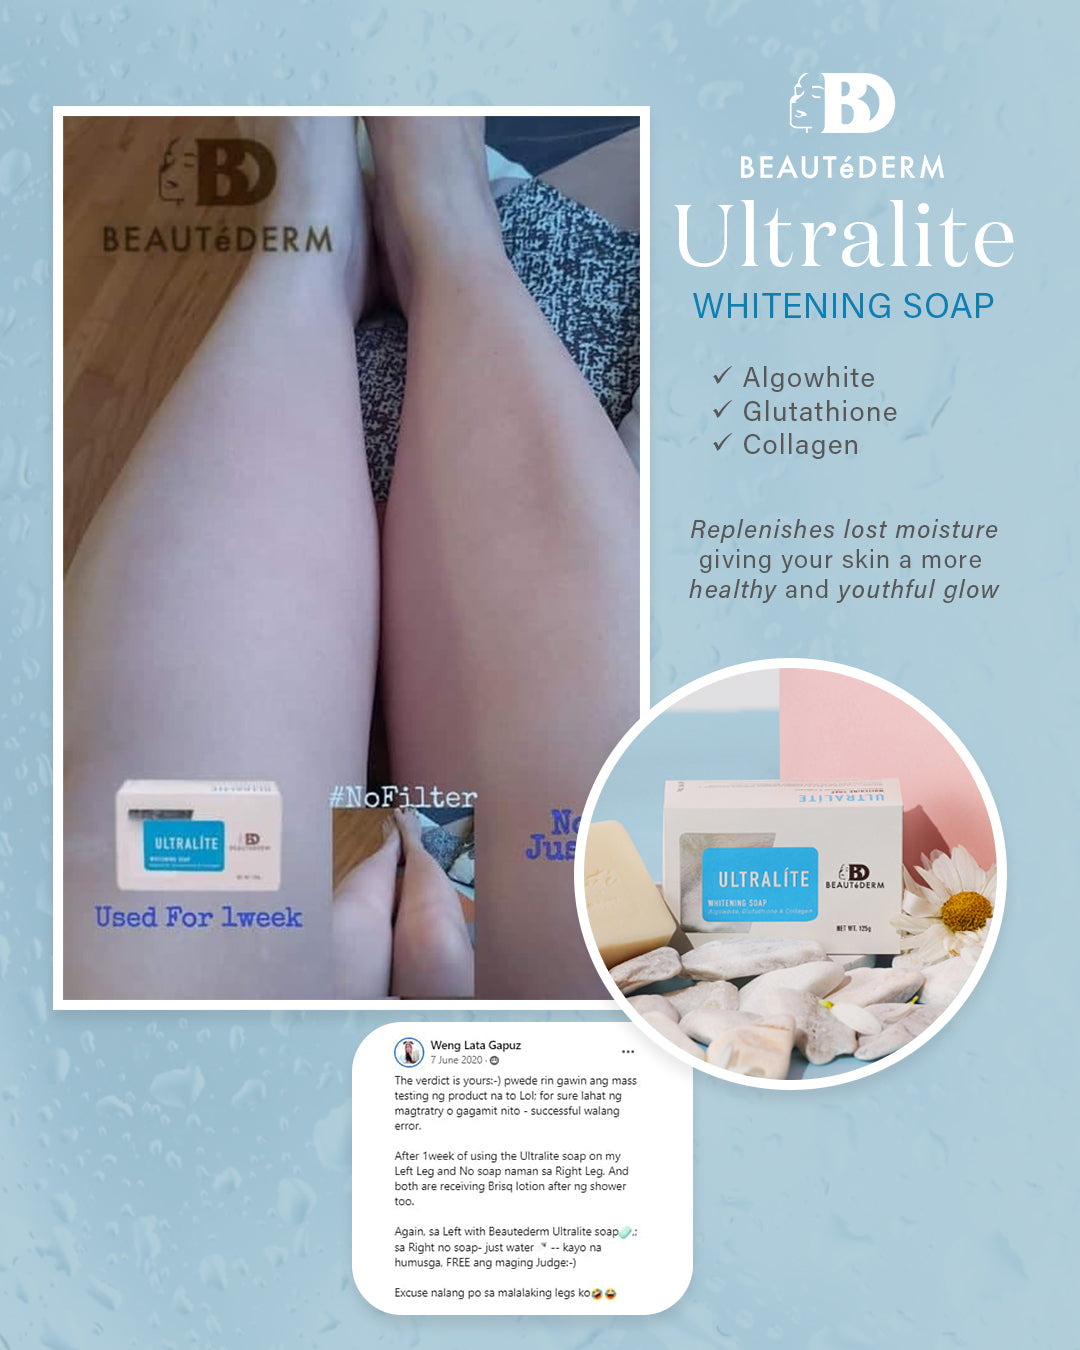 Beautederm Ultralite Whitening Soap Story Testimony